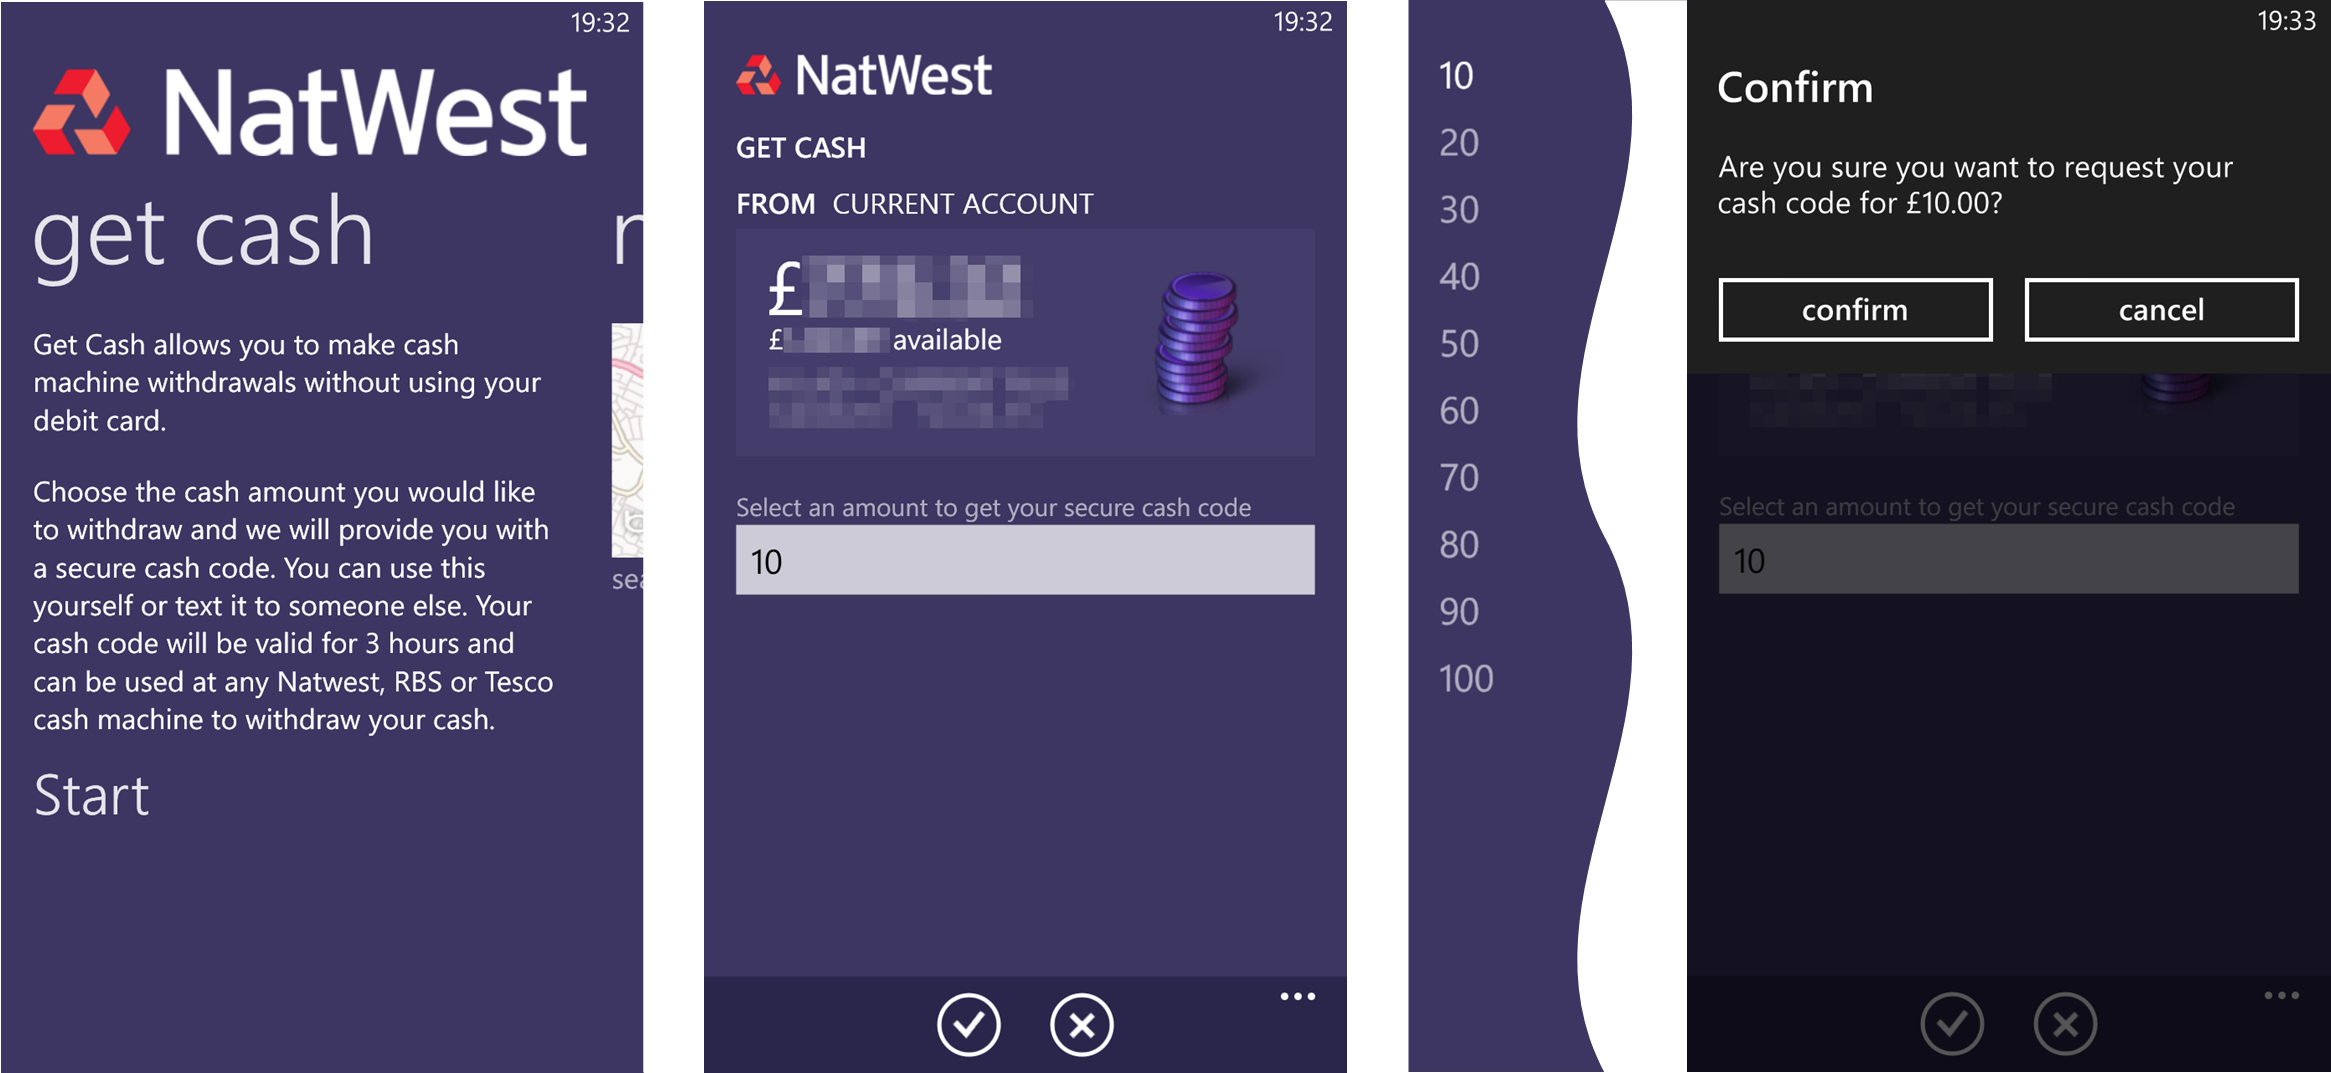 NatWest App (5) Get Cash